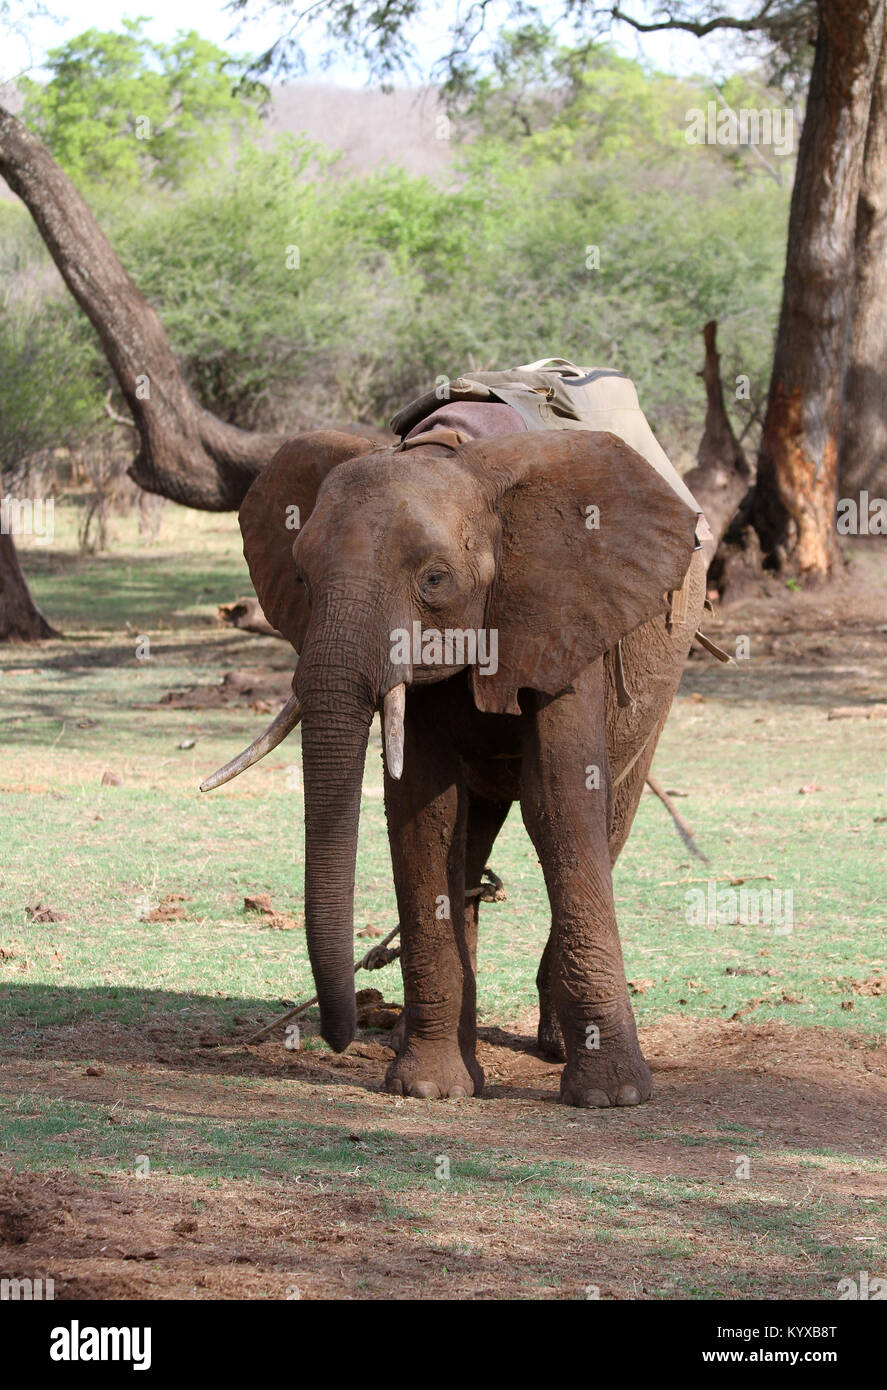 Elephant standing in field, Zimbabwe. Stock Photo